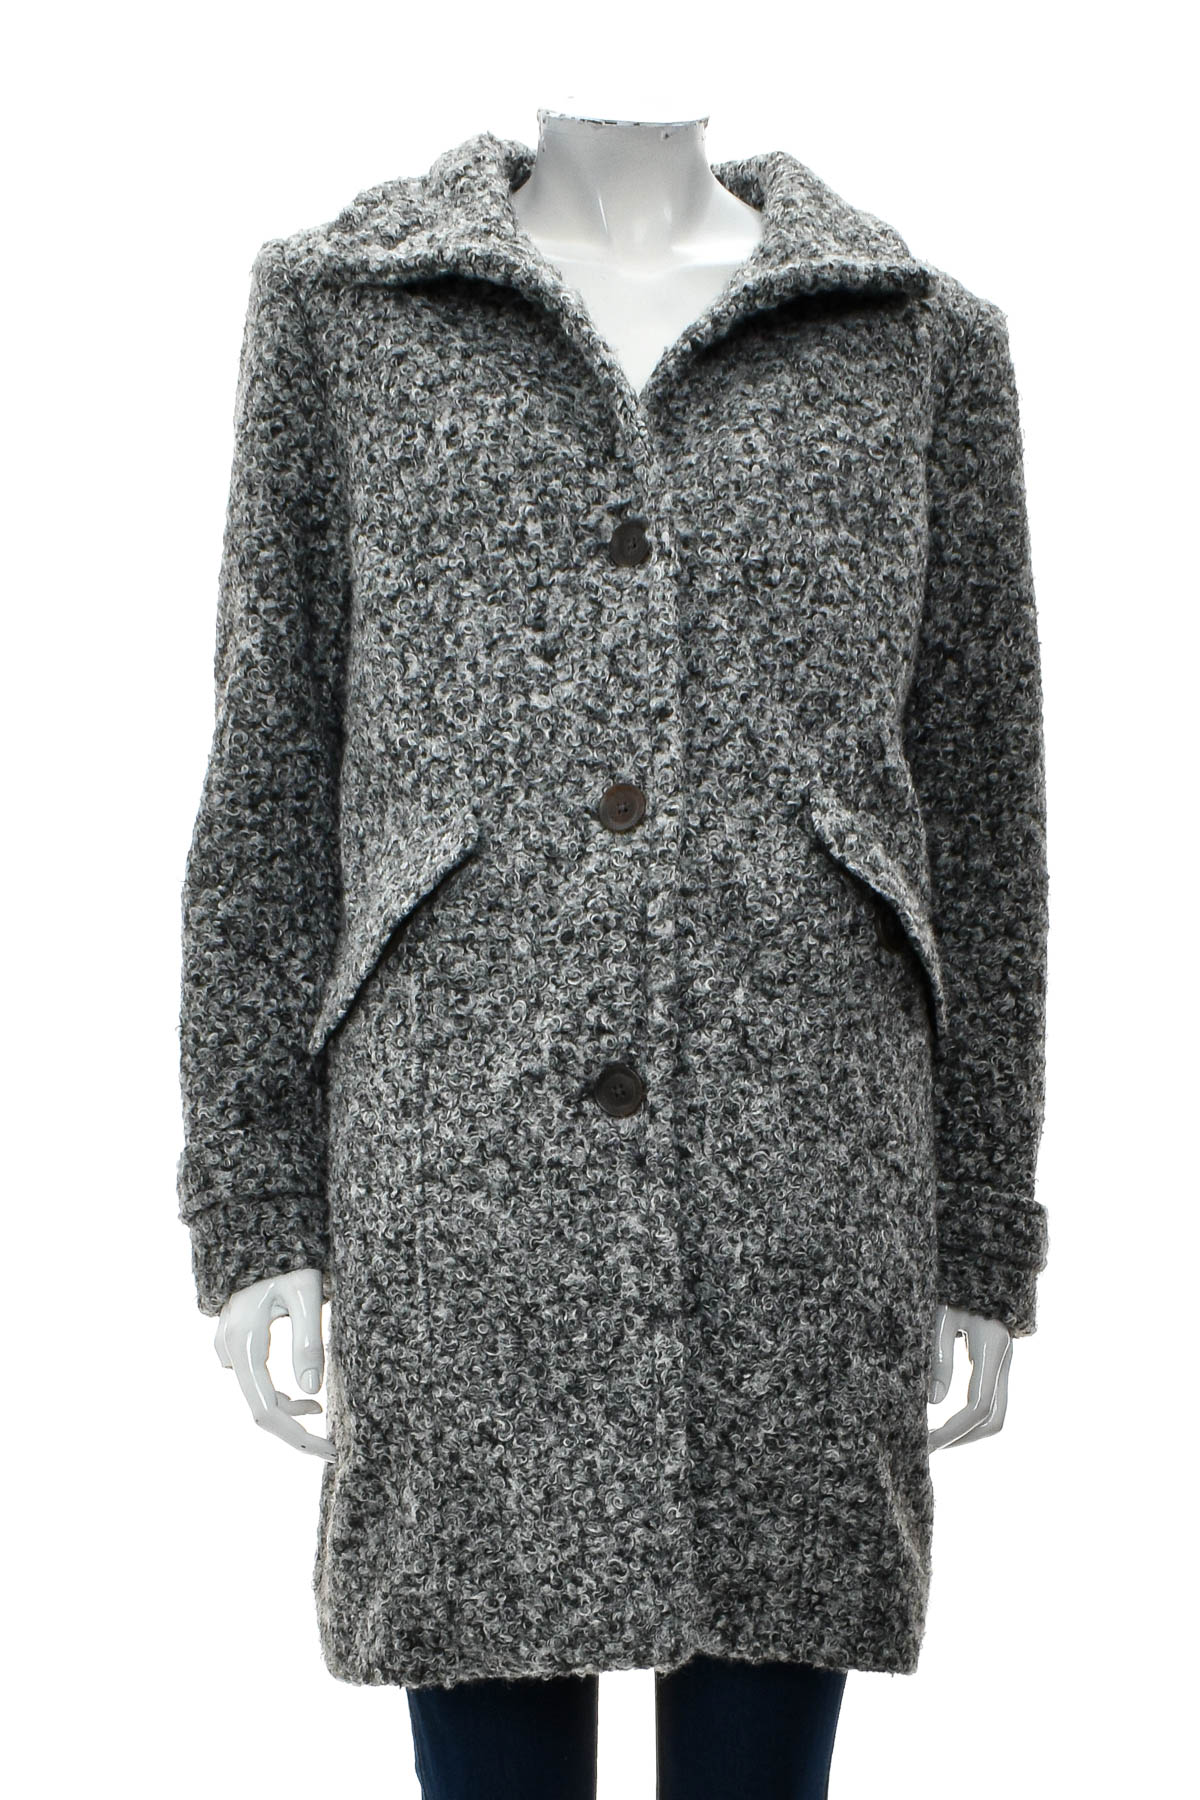 Women's coat - Jean Pascale - 0